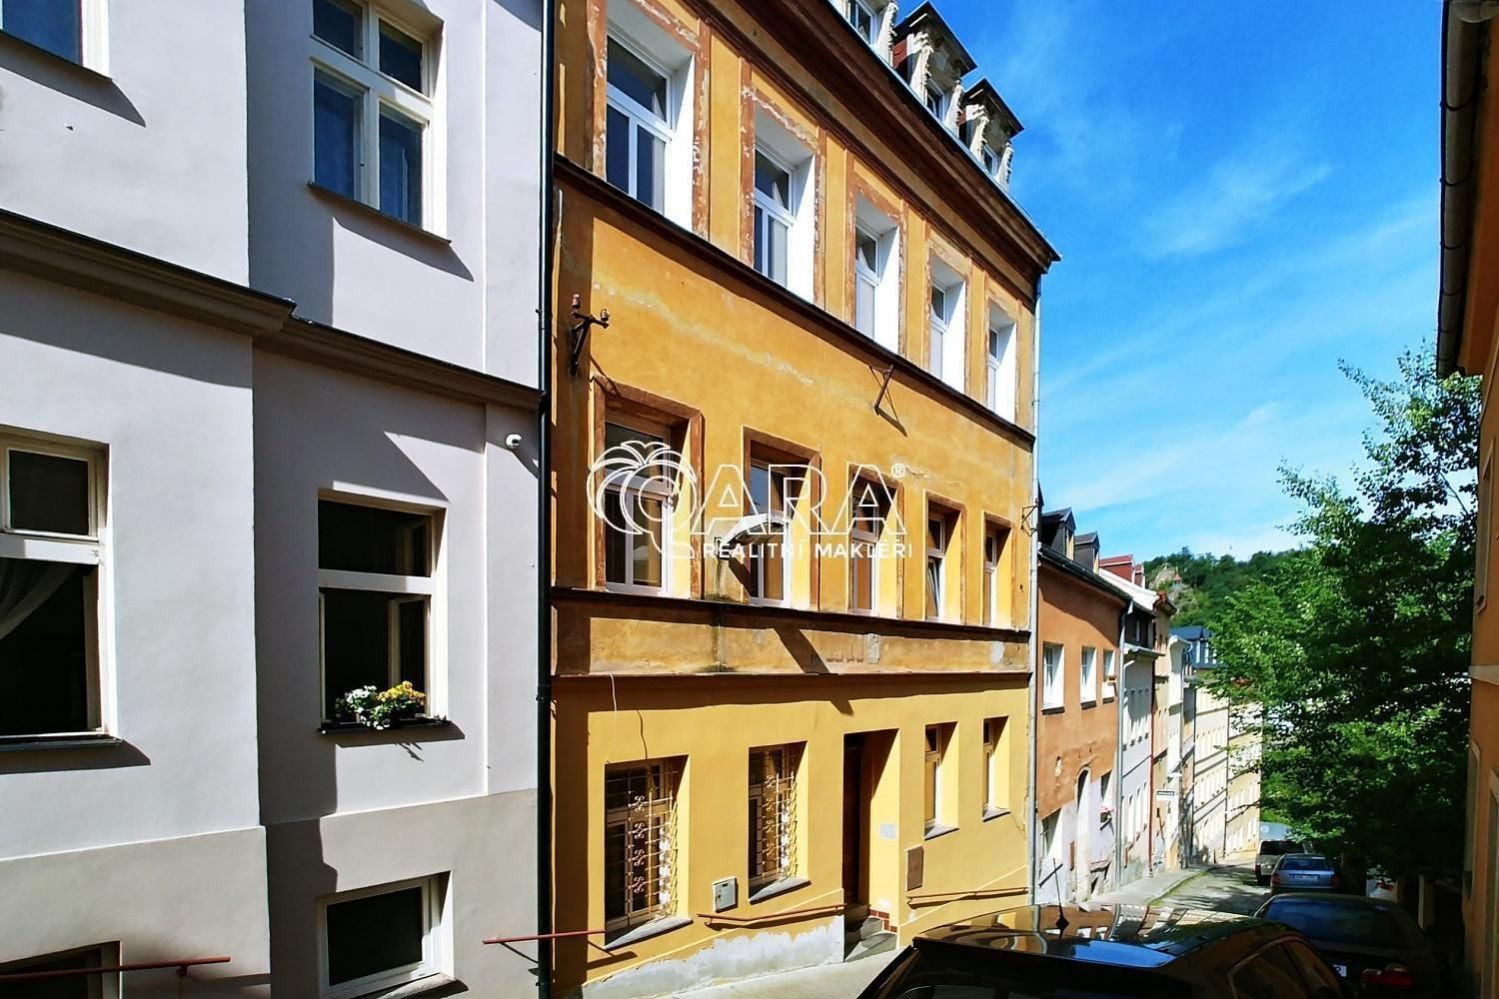 Pronájem bytu 3+1, 60 m2, Karlovy Vary, ul. Vyšehradská, část. zař., zahrada, obrázek č. 1